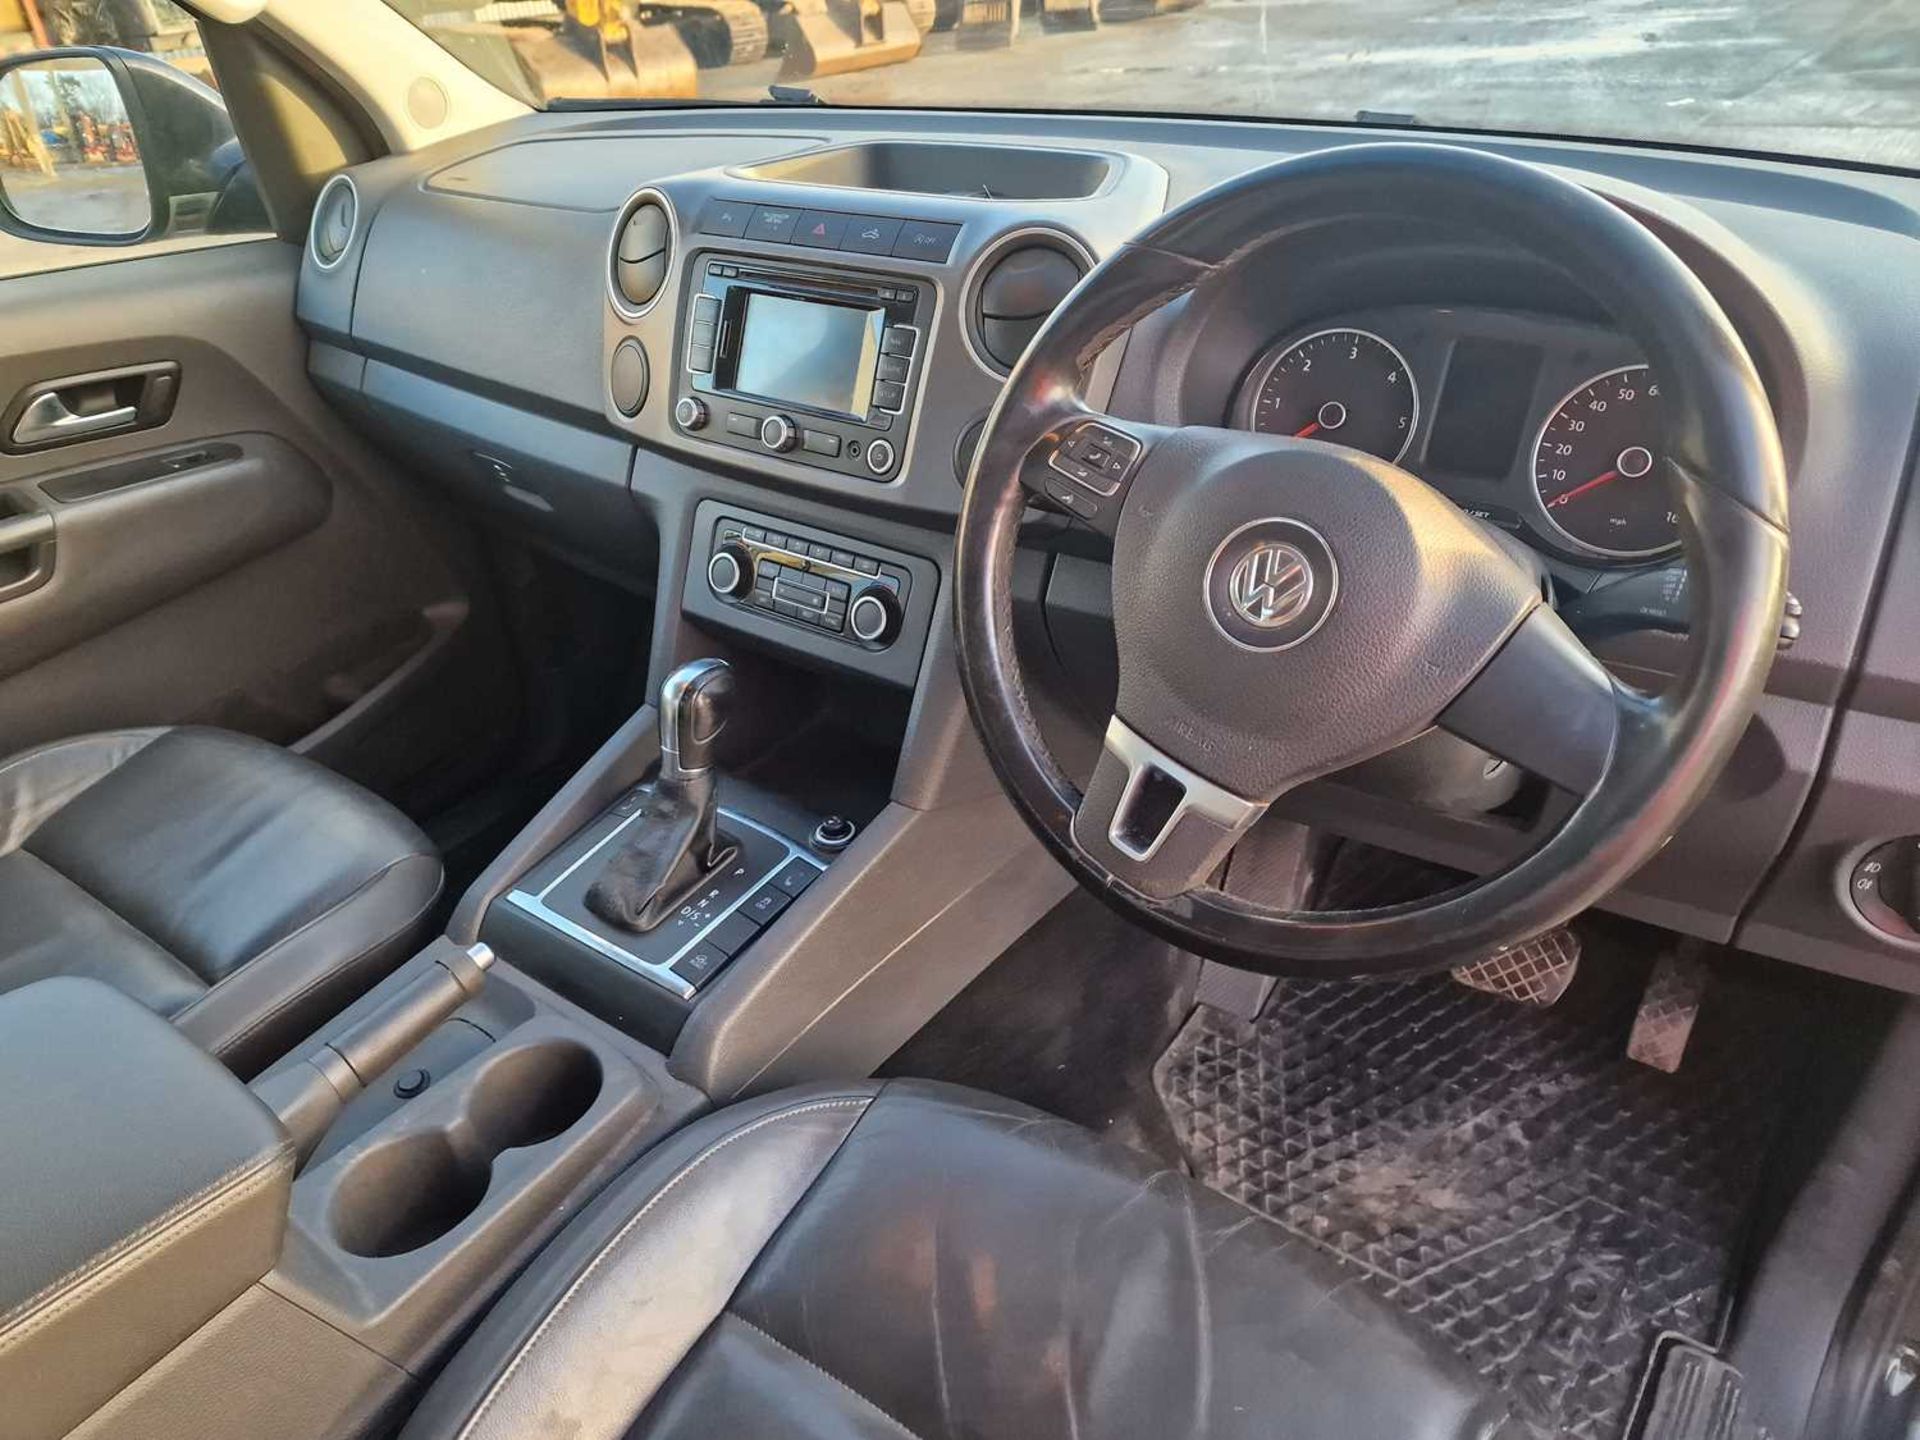 2018 VW Amarok TDI Bluemotion 4WD Crew Cab Pick Up, Auto, Sat Nav, Parking Sensors, Full Leather, He - Image 19 of 23